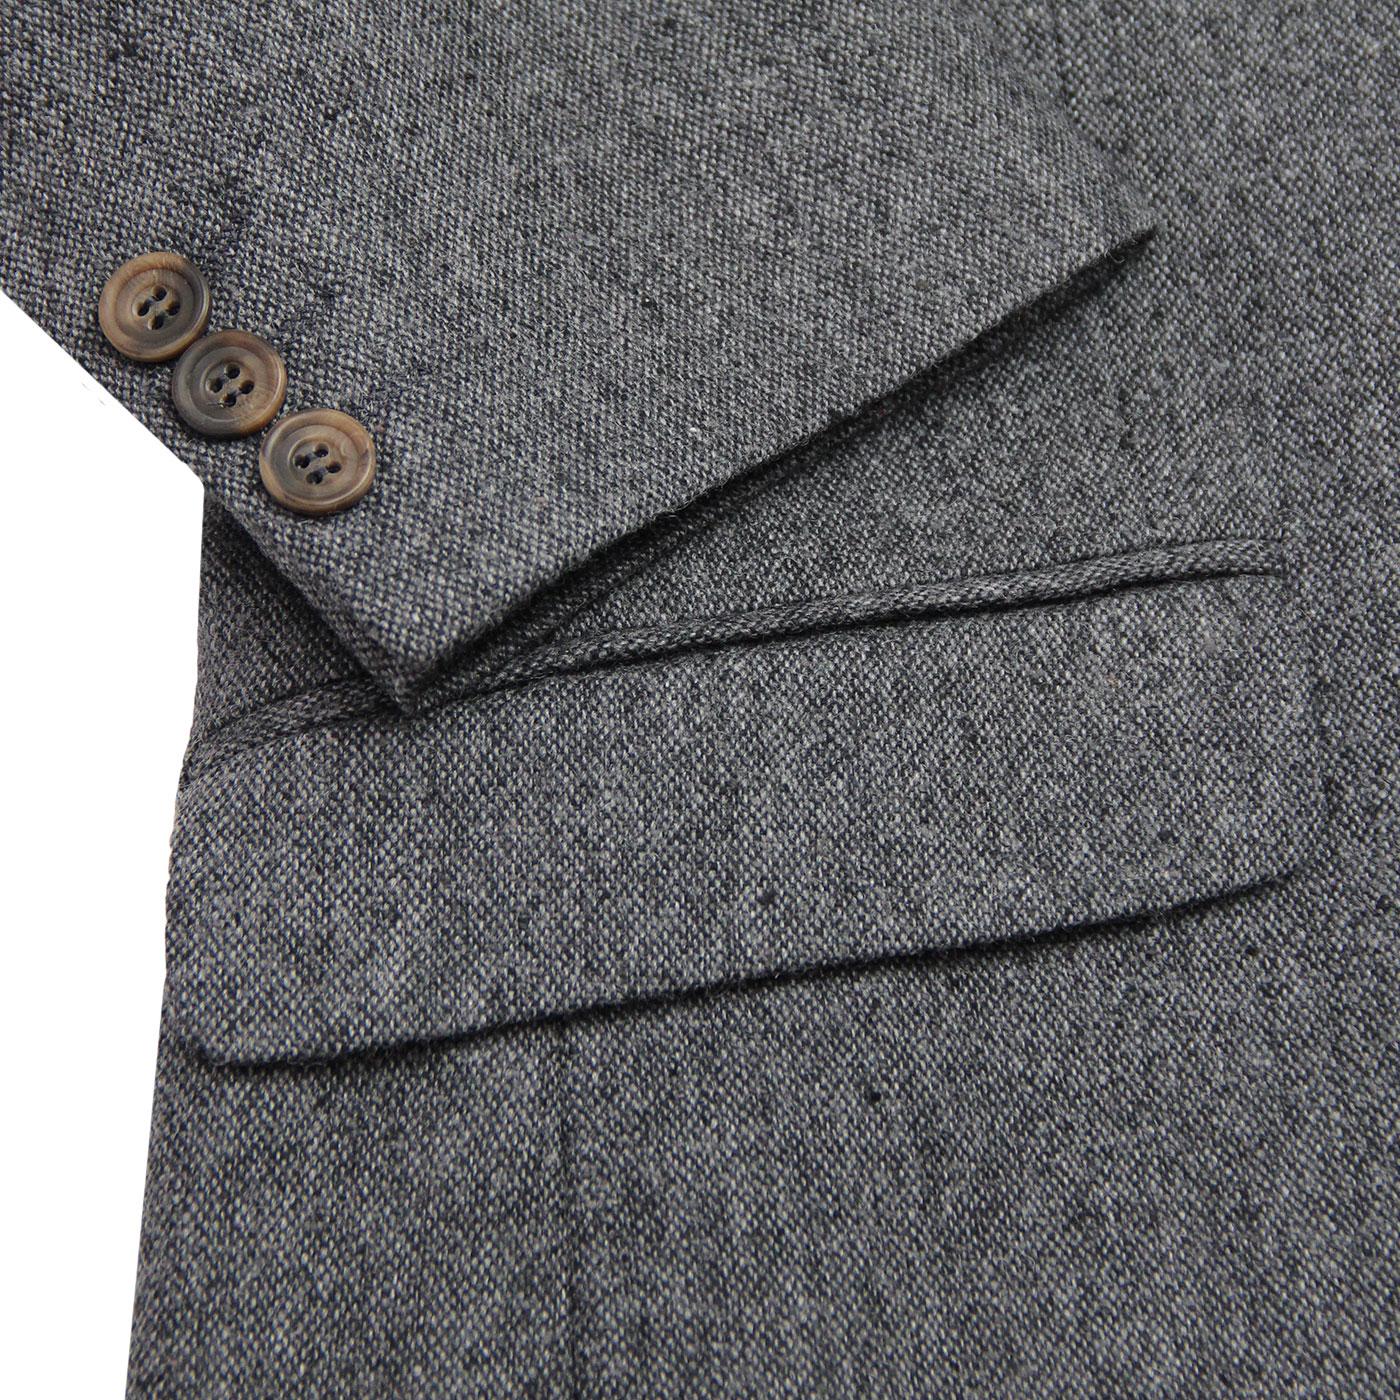 Men's 1960s Mod Donegal 2 Button Suit Blazer in Charcoal